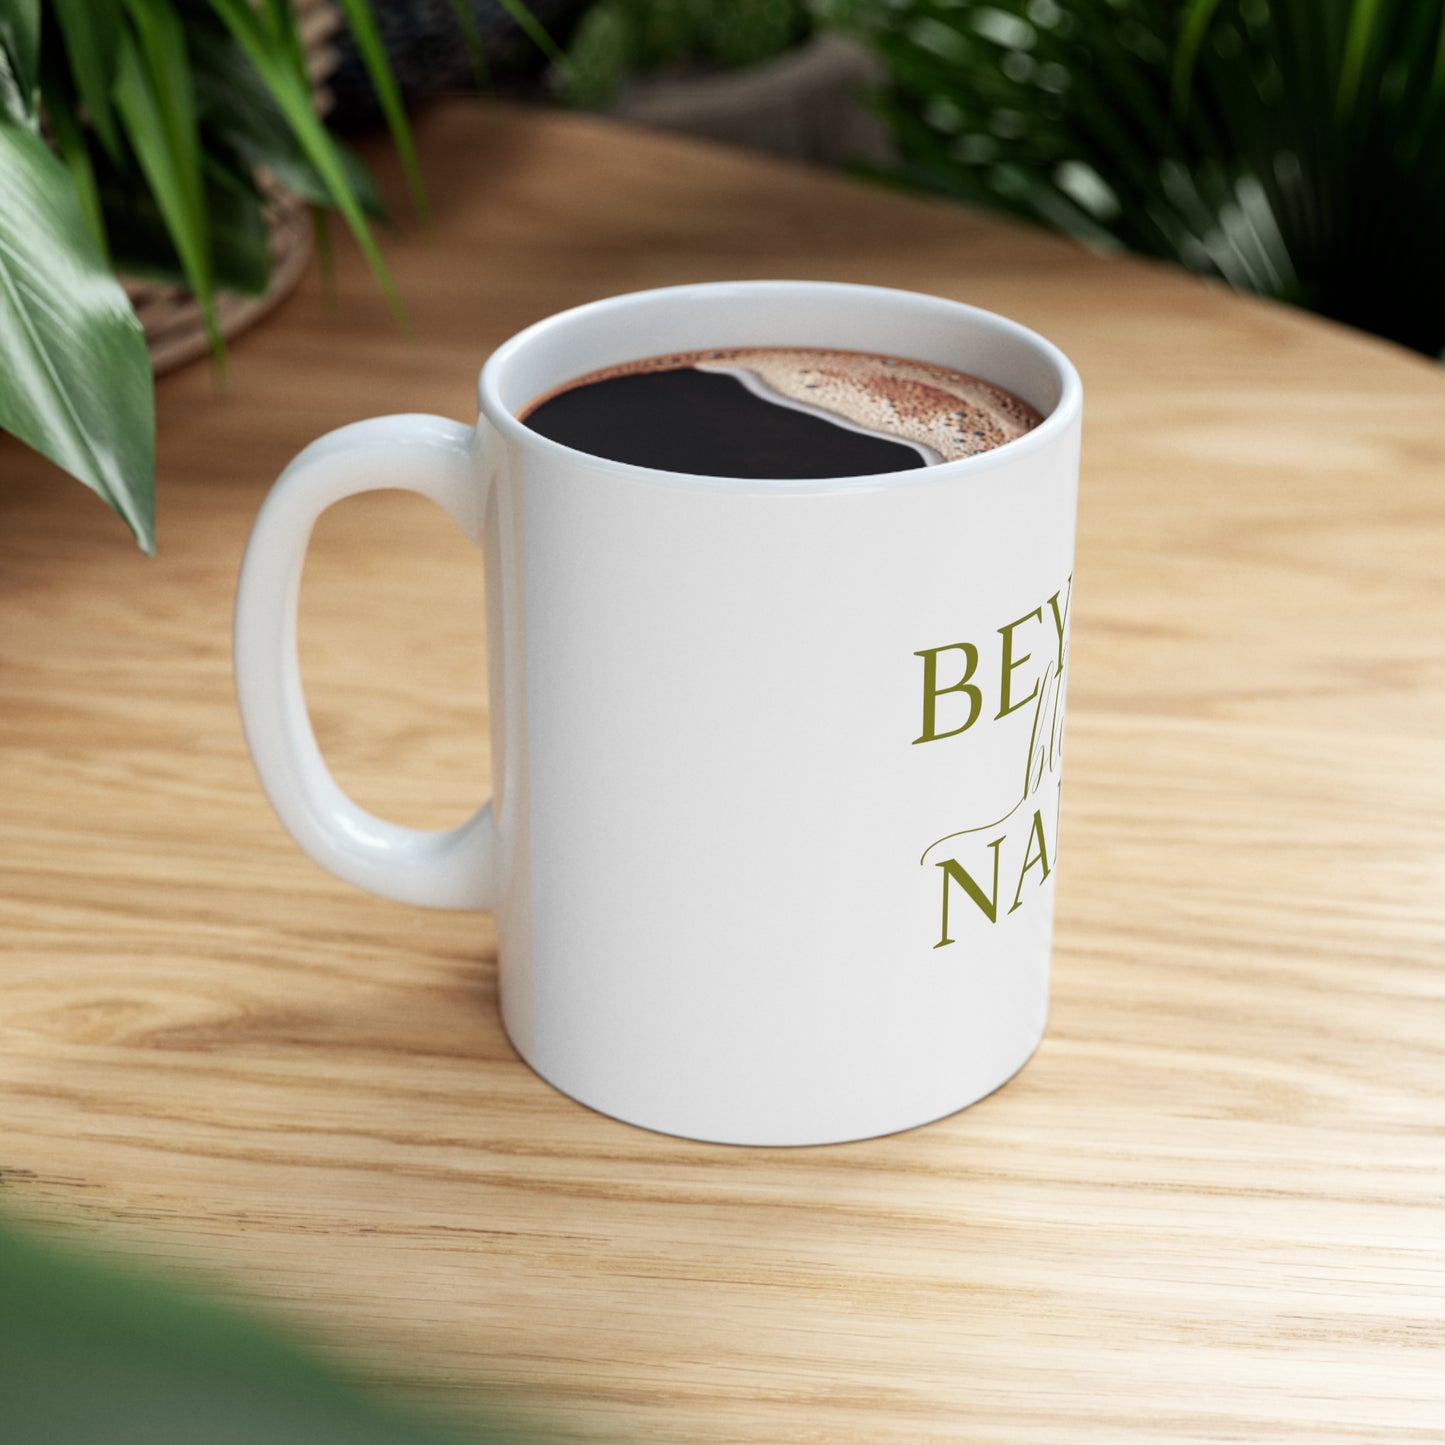 Beyond Blessed Nanny - Plain Ceramic Mug 11oz - Olive Green